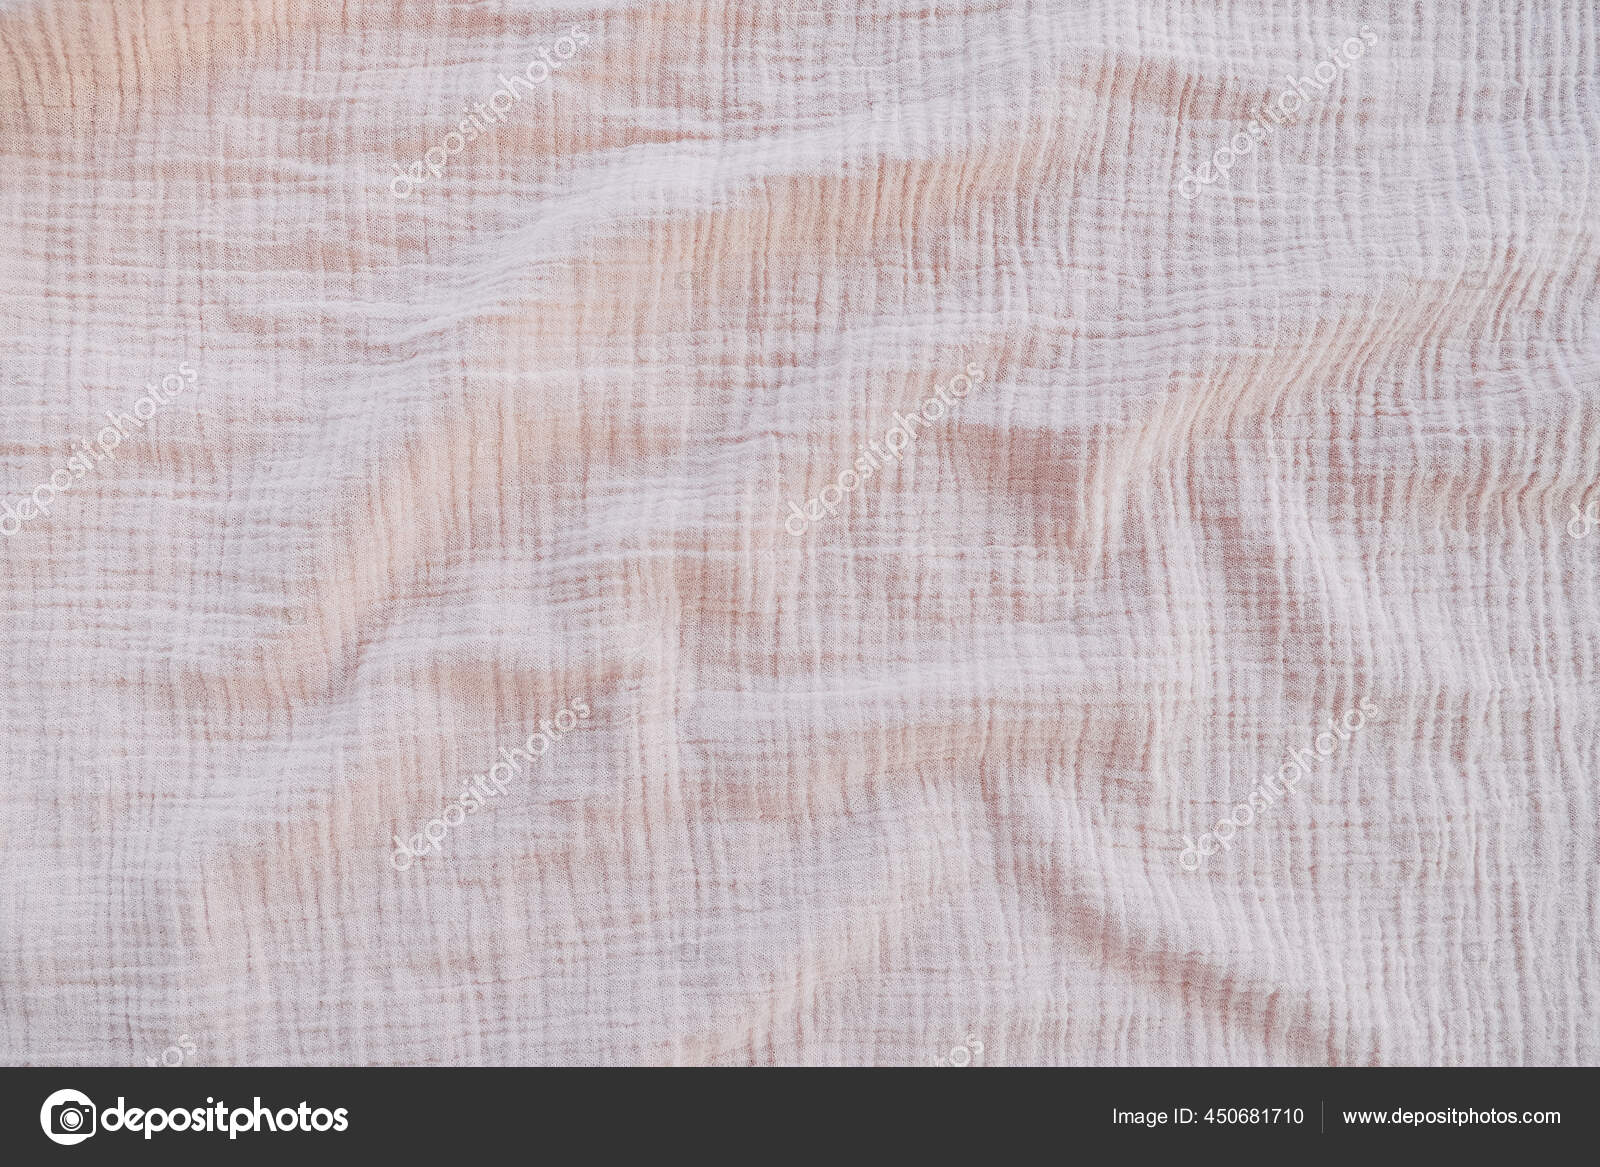 Muslin cloth texture background in neutral tones. Muslin cotton